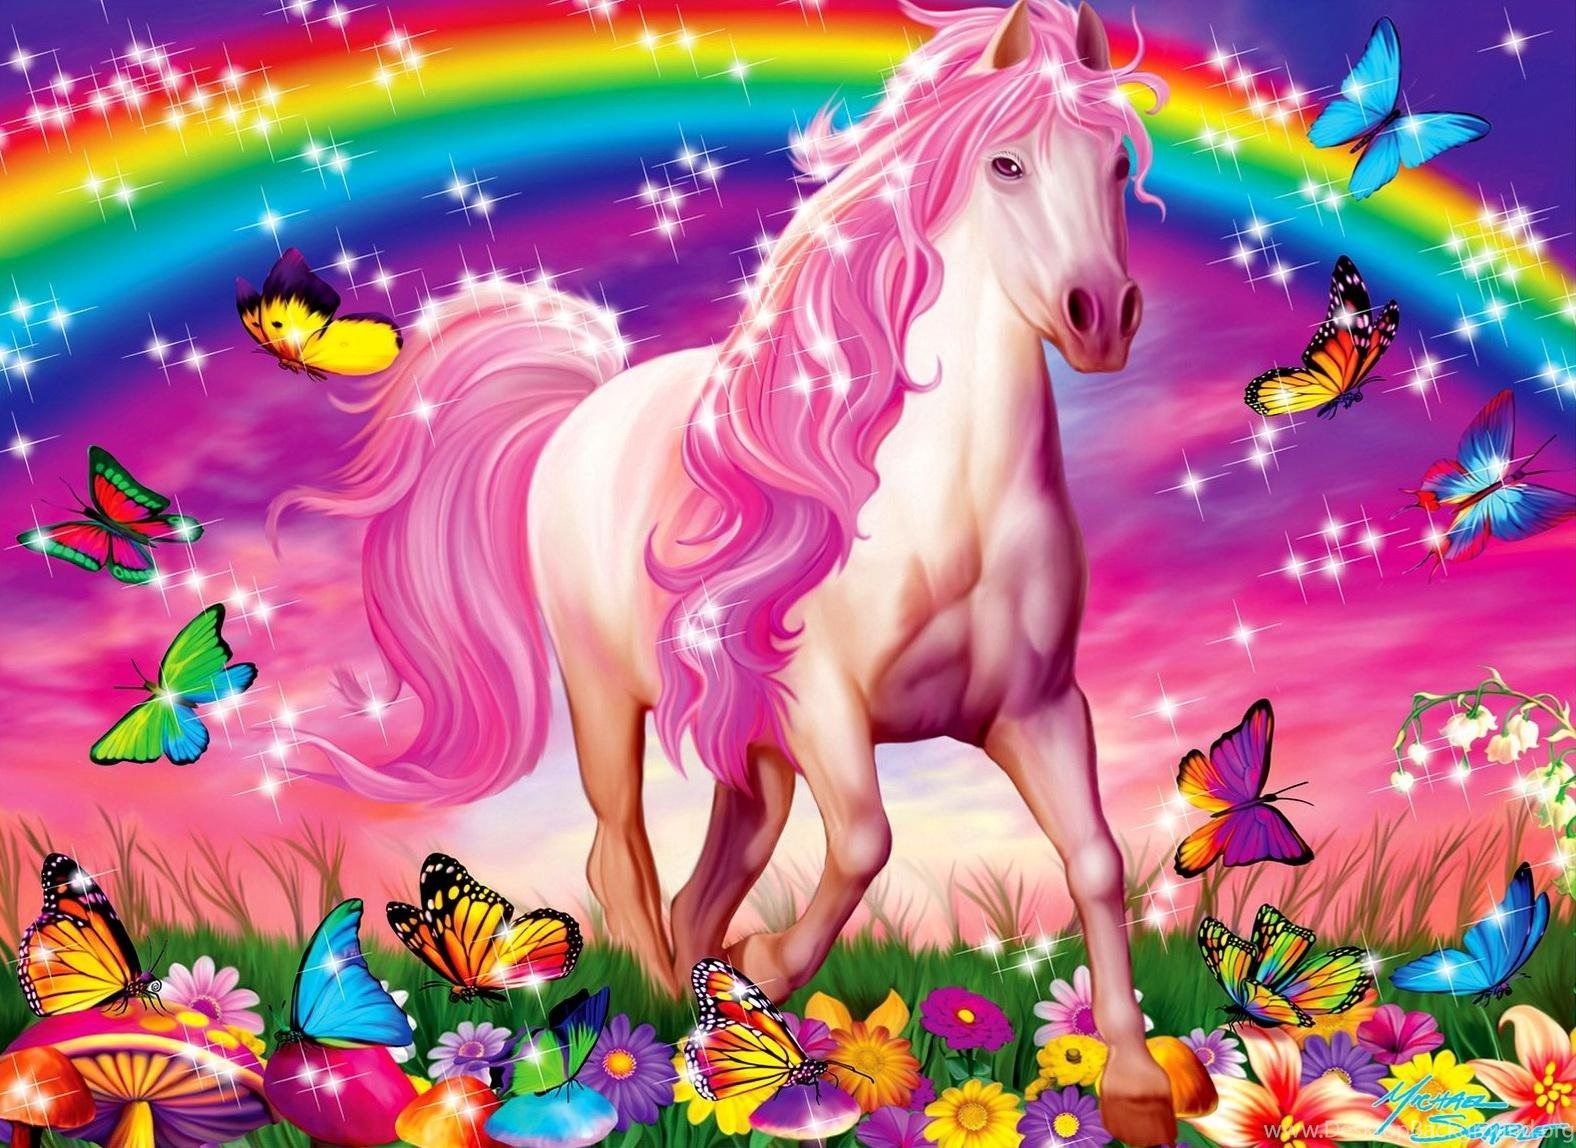 Rainbow Unicorn Wallpaper Free .wallpaperaccess.com